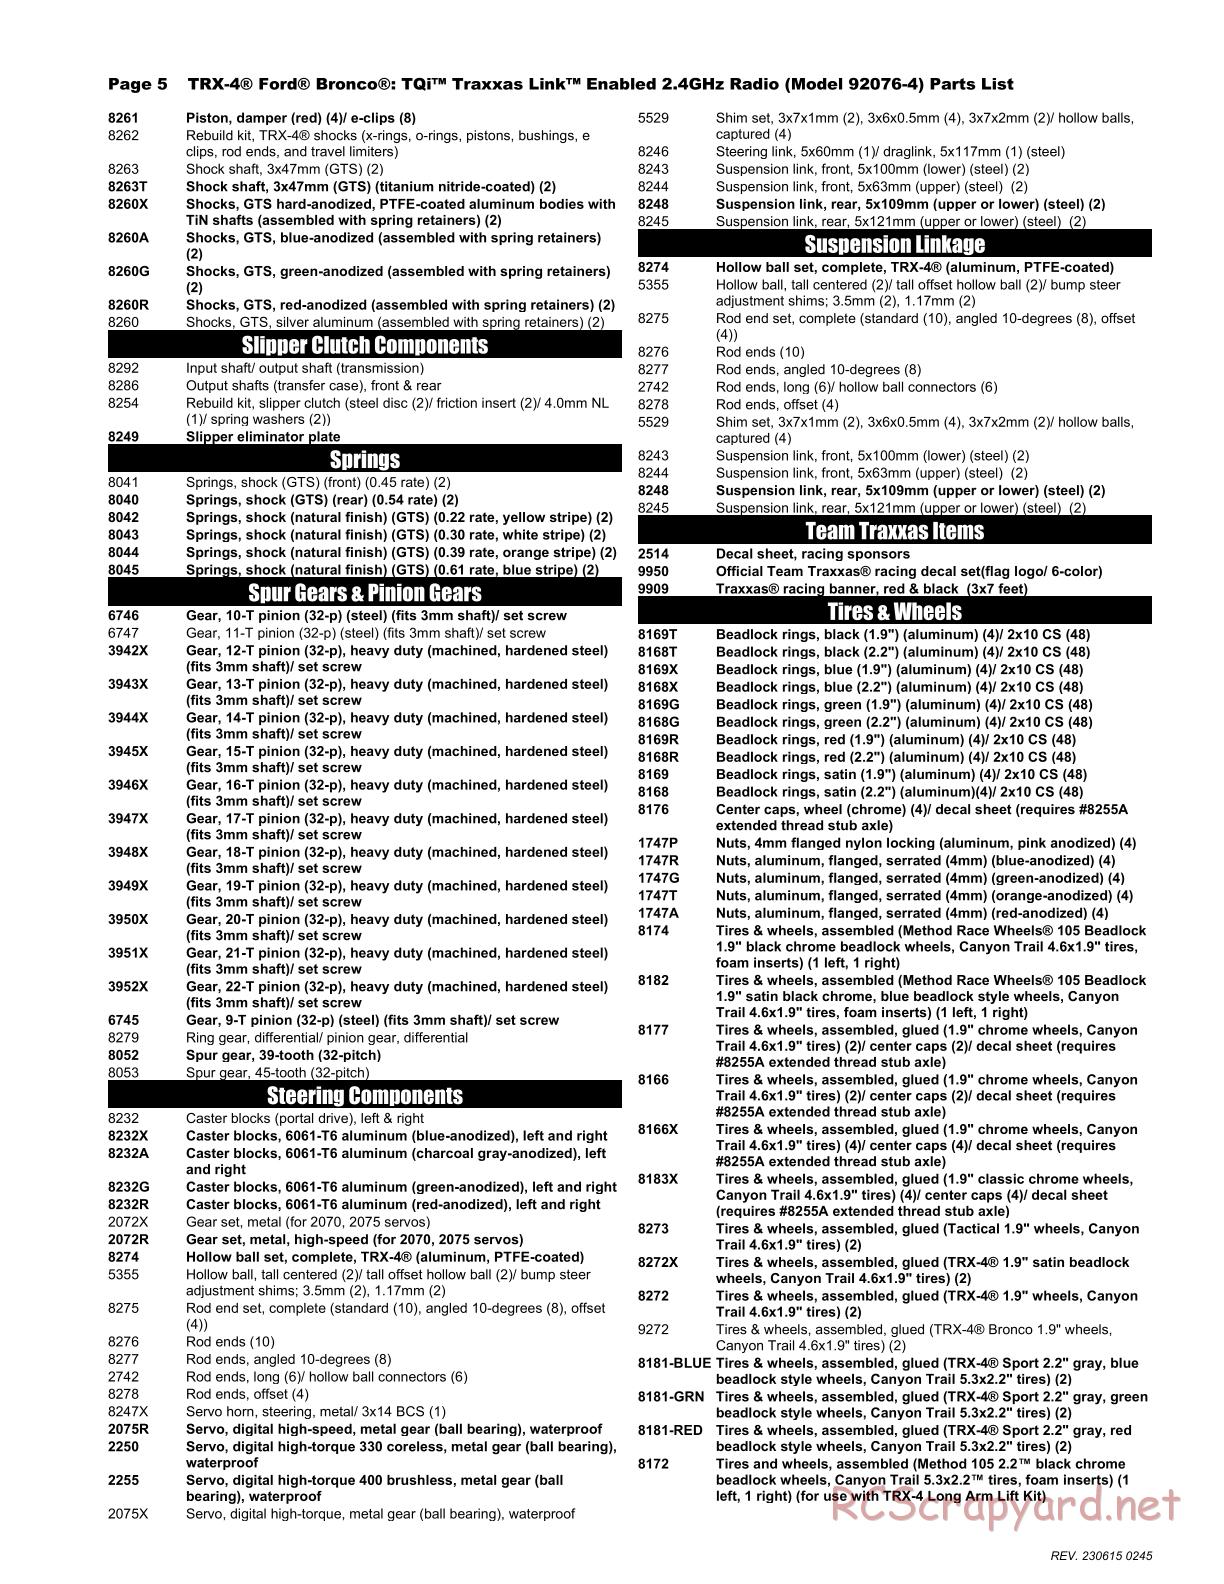 Traxxas - TRX-4 Ford Bronco (2021) - Parts List - Page 5